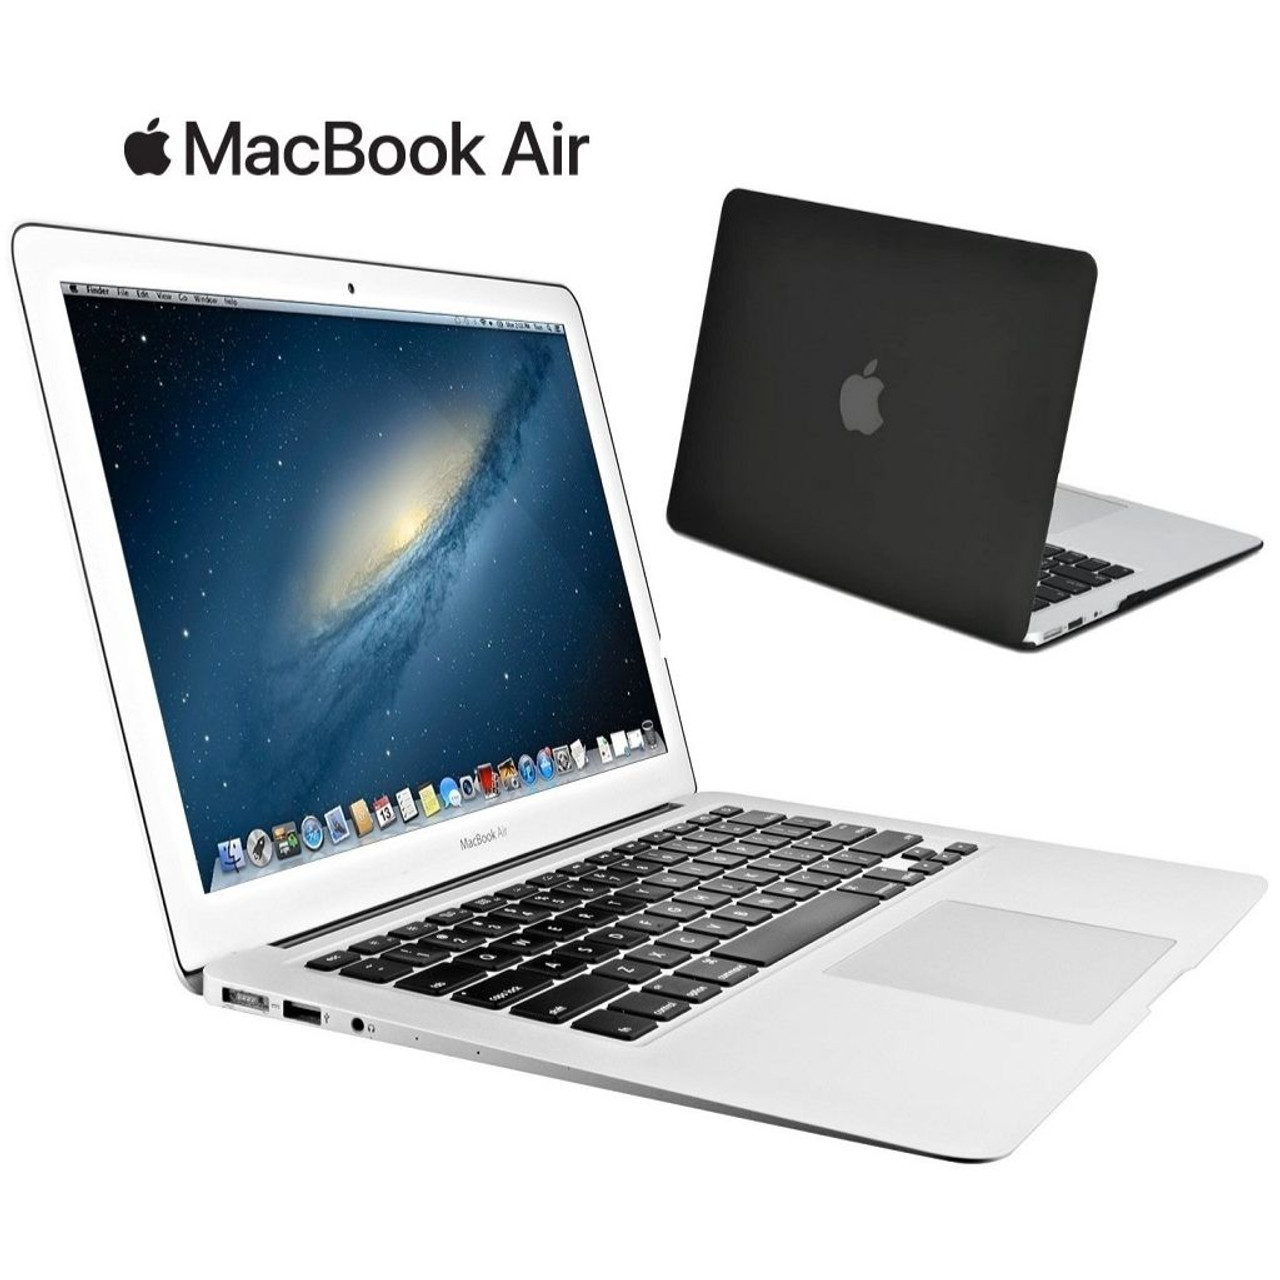 Apple® 13” Macbook Air with Intel Core i5, 4GB RAM, 128GB SSD + Black Case $249.99 (64% OFF)